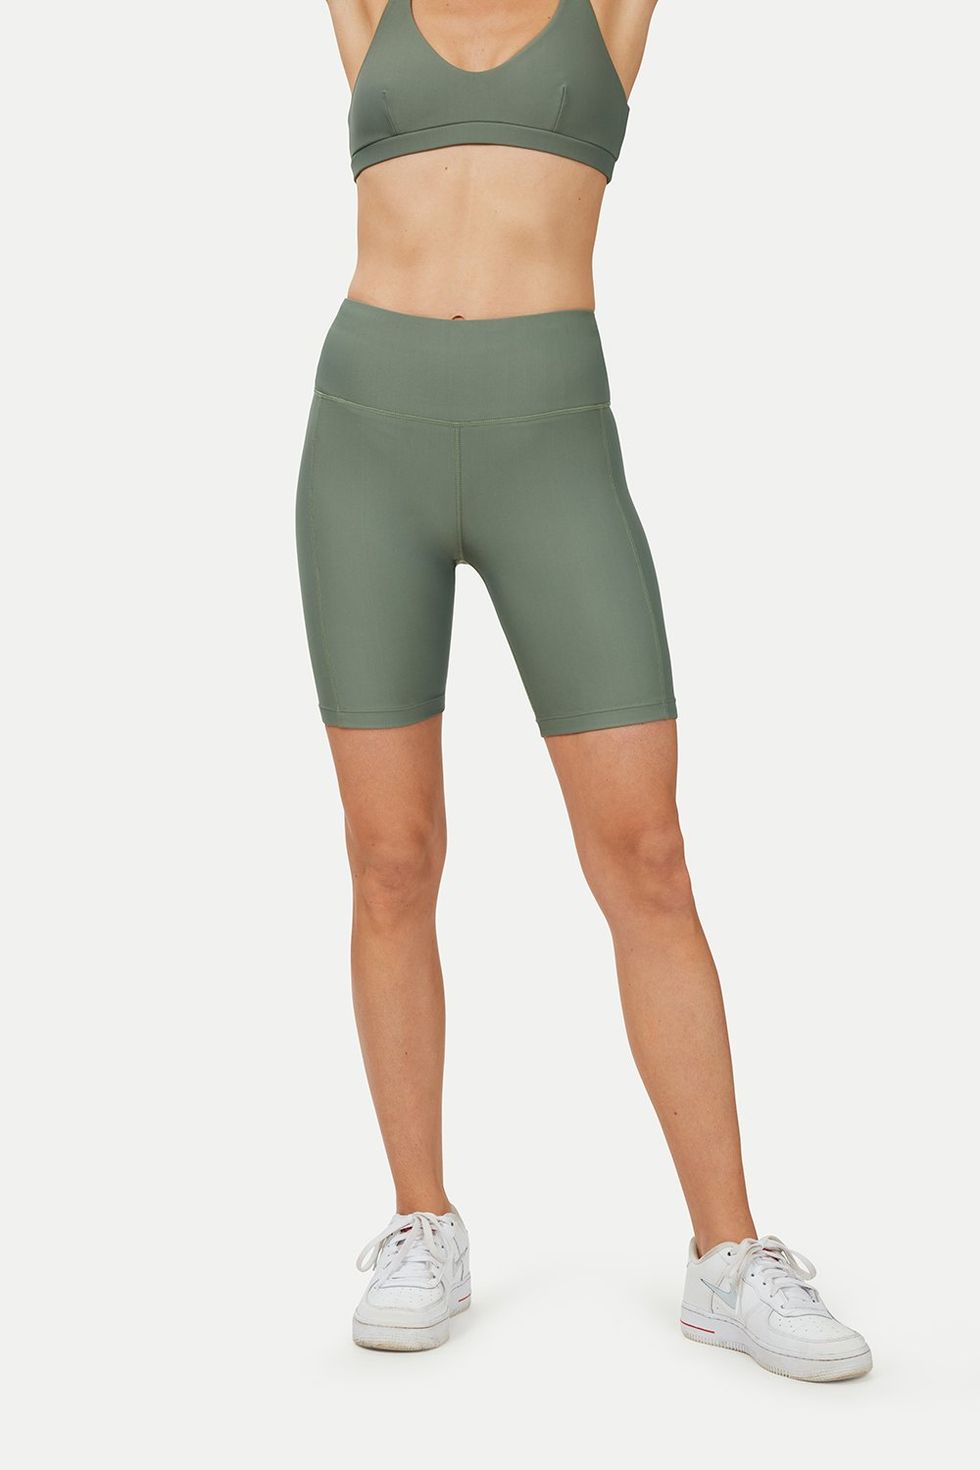 Buy womens yoga Shorts - Best quality